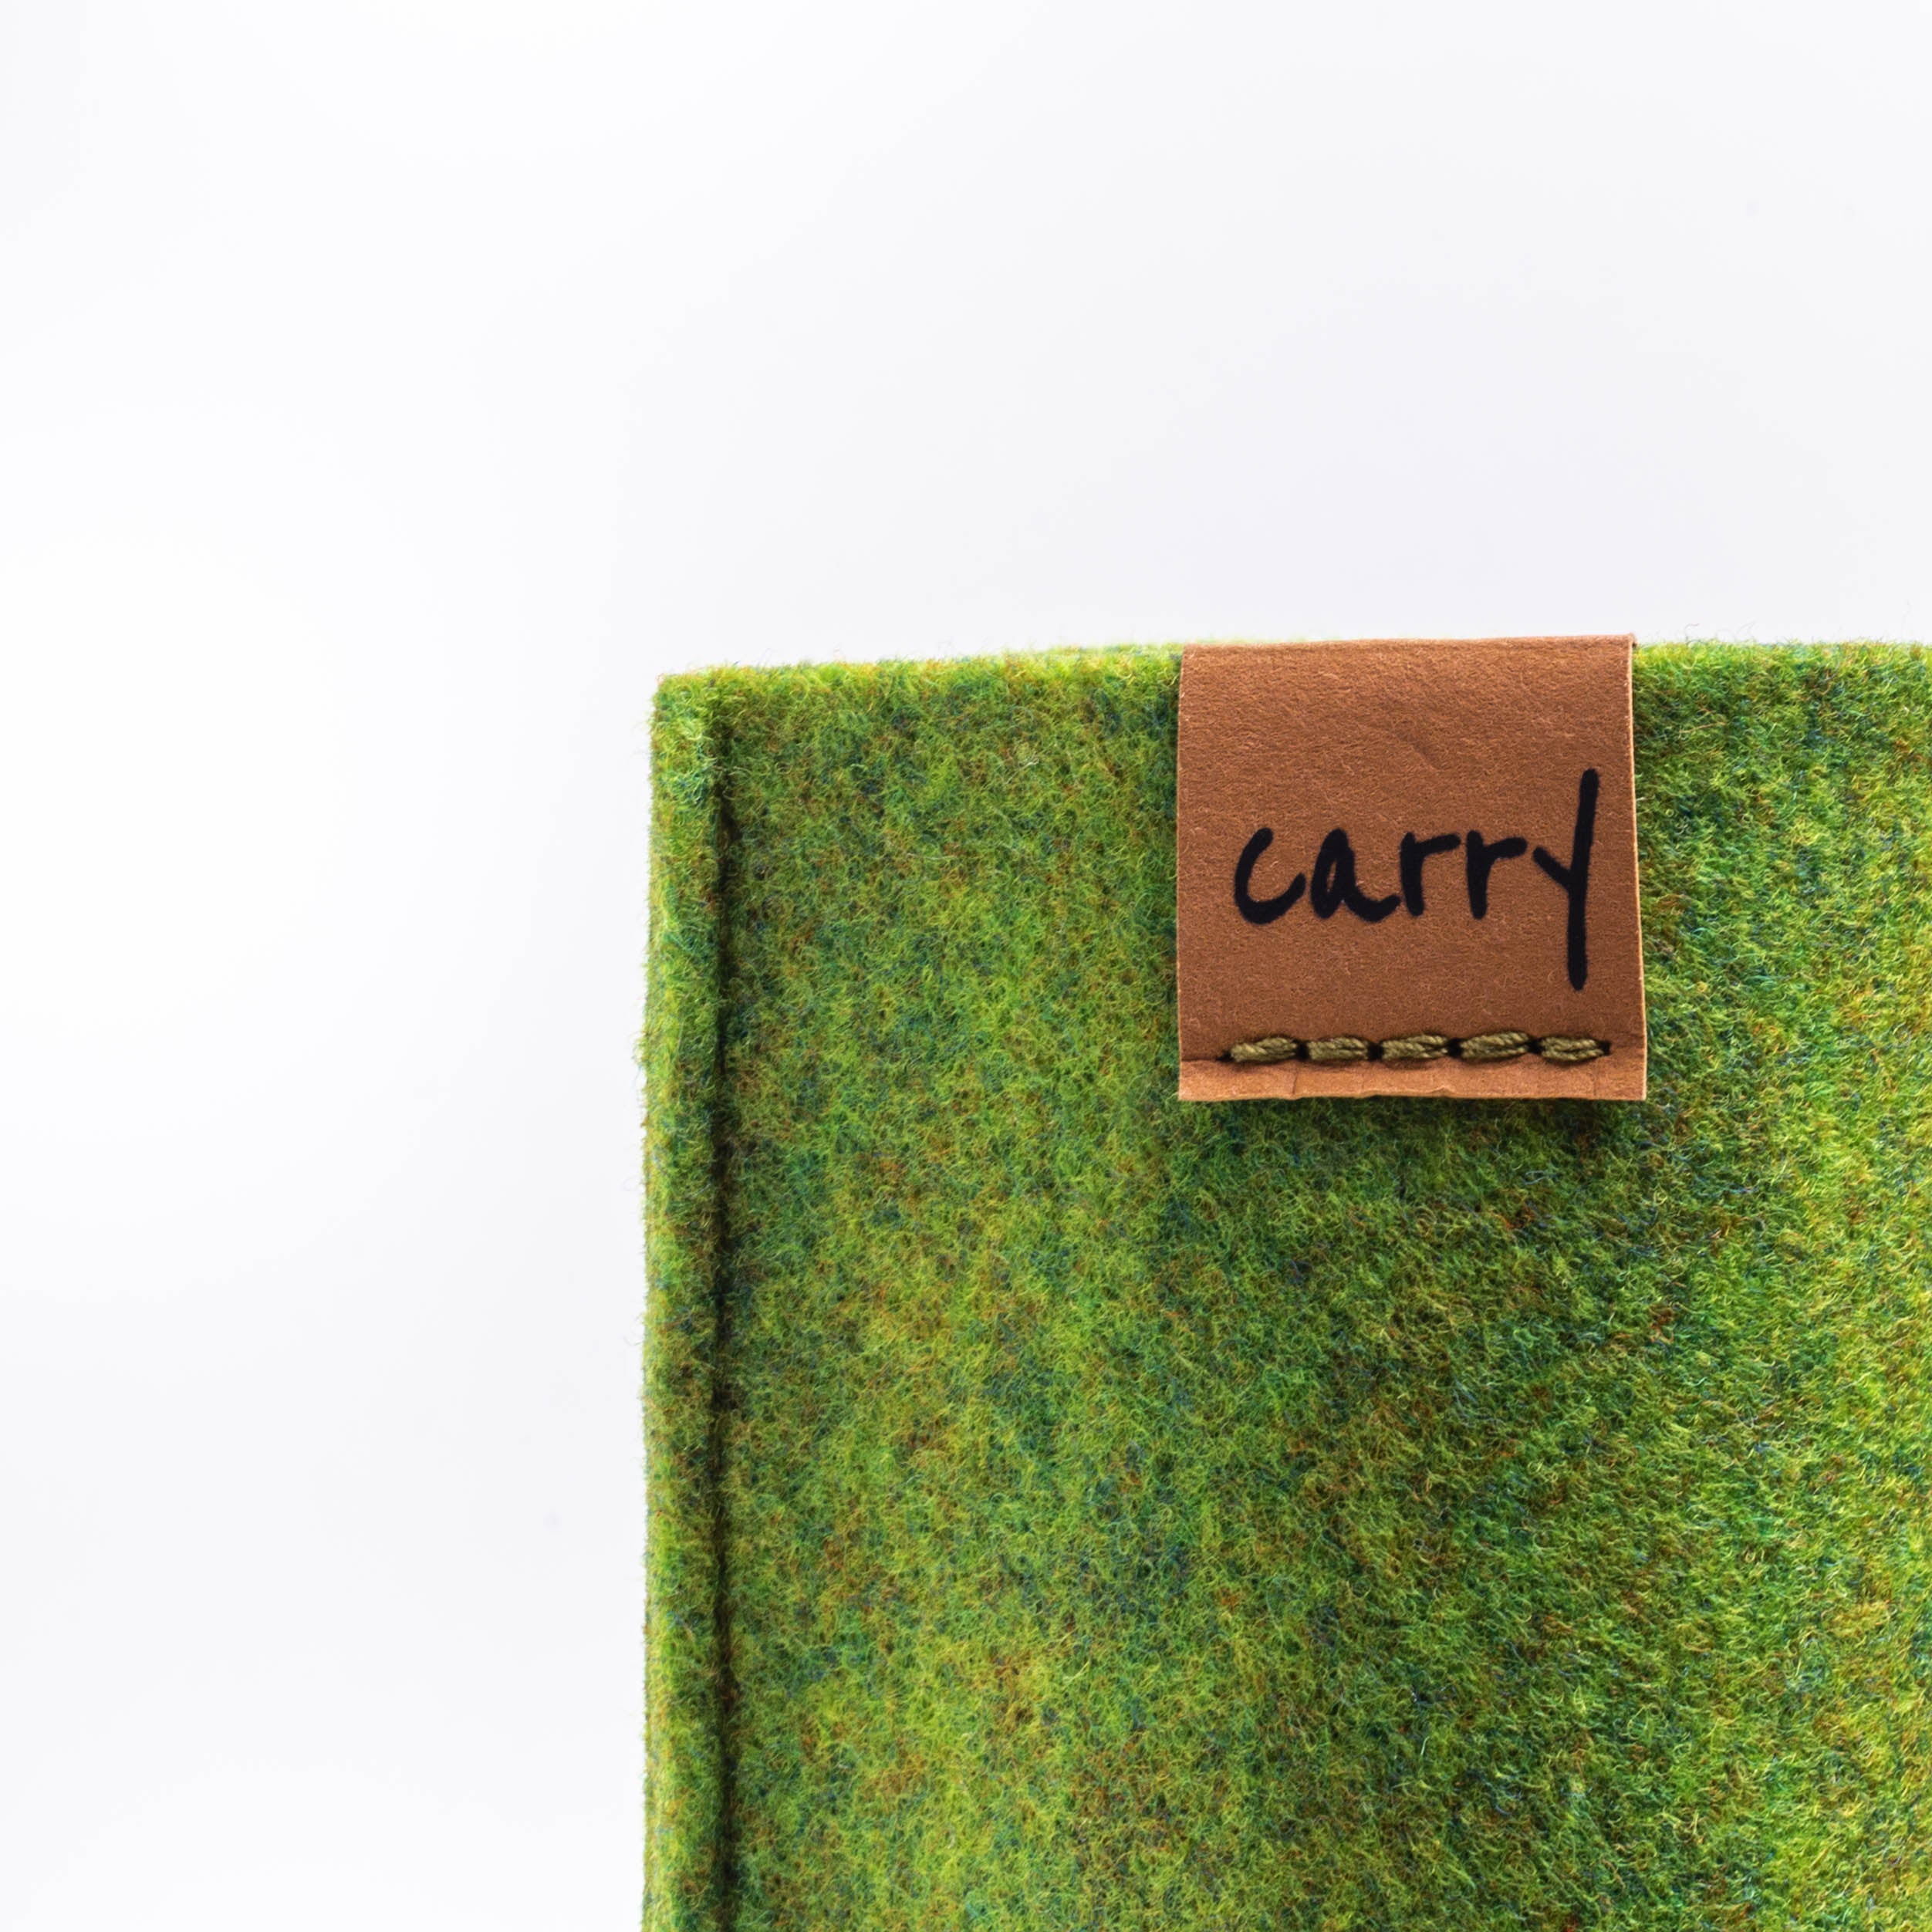 Naht und Logo an der CARRY Schutzhülle in Limetten-grün aus einem Filz aus recyceltem PET